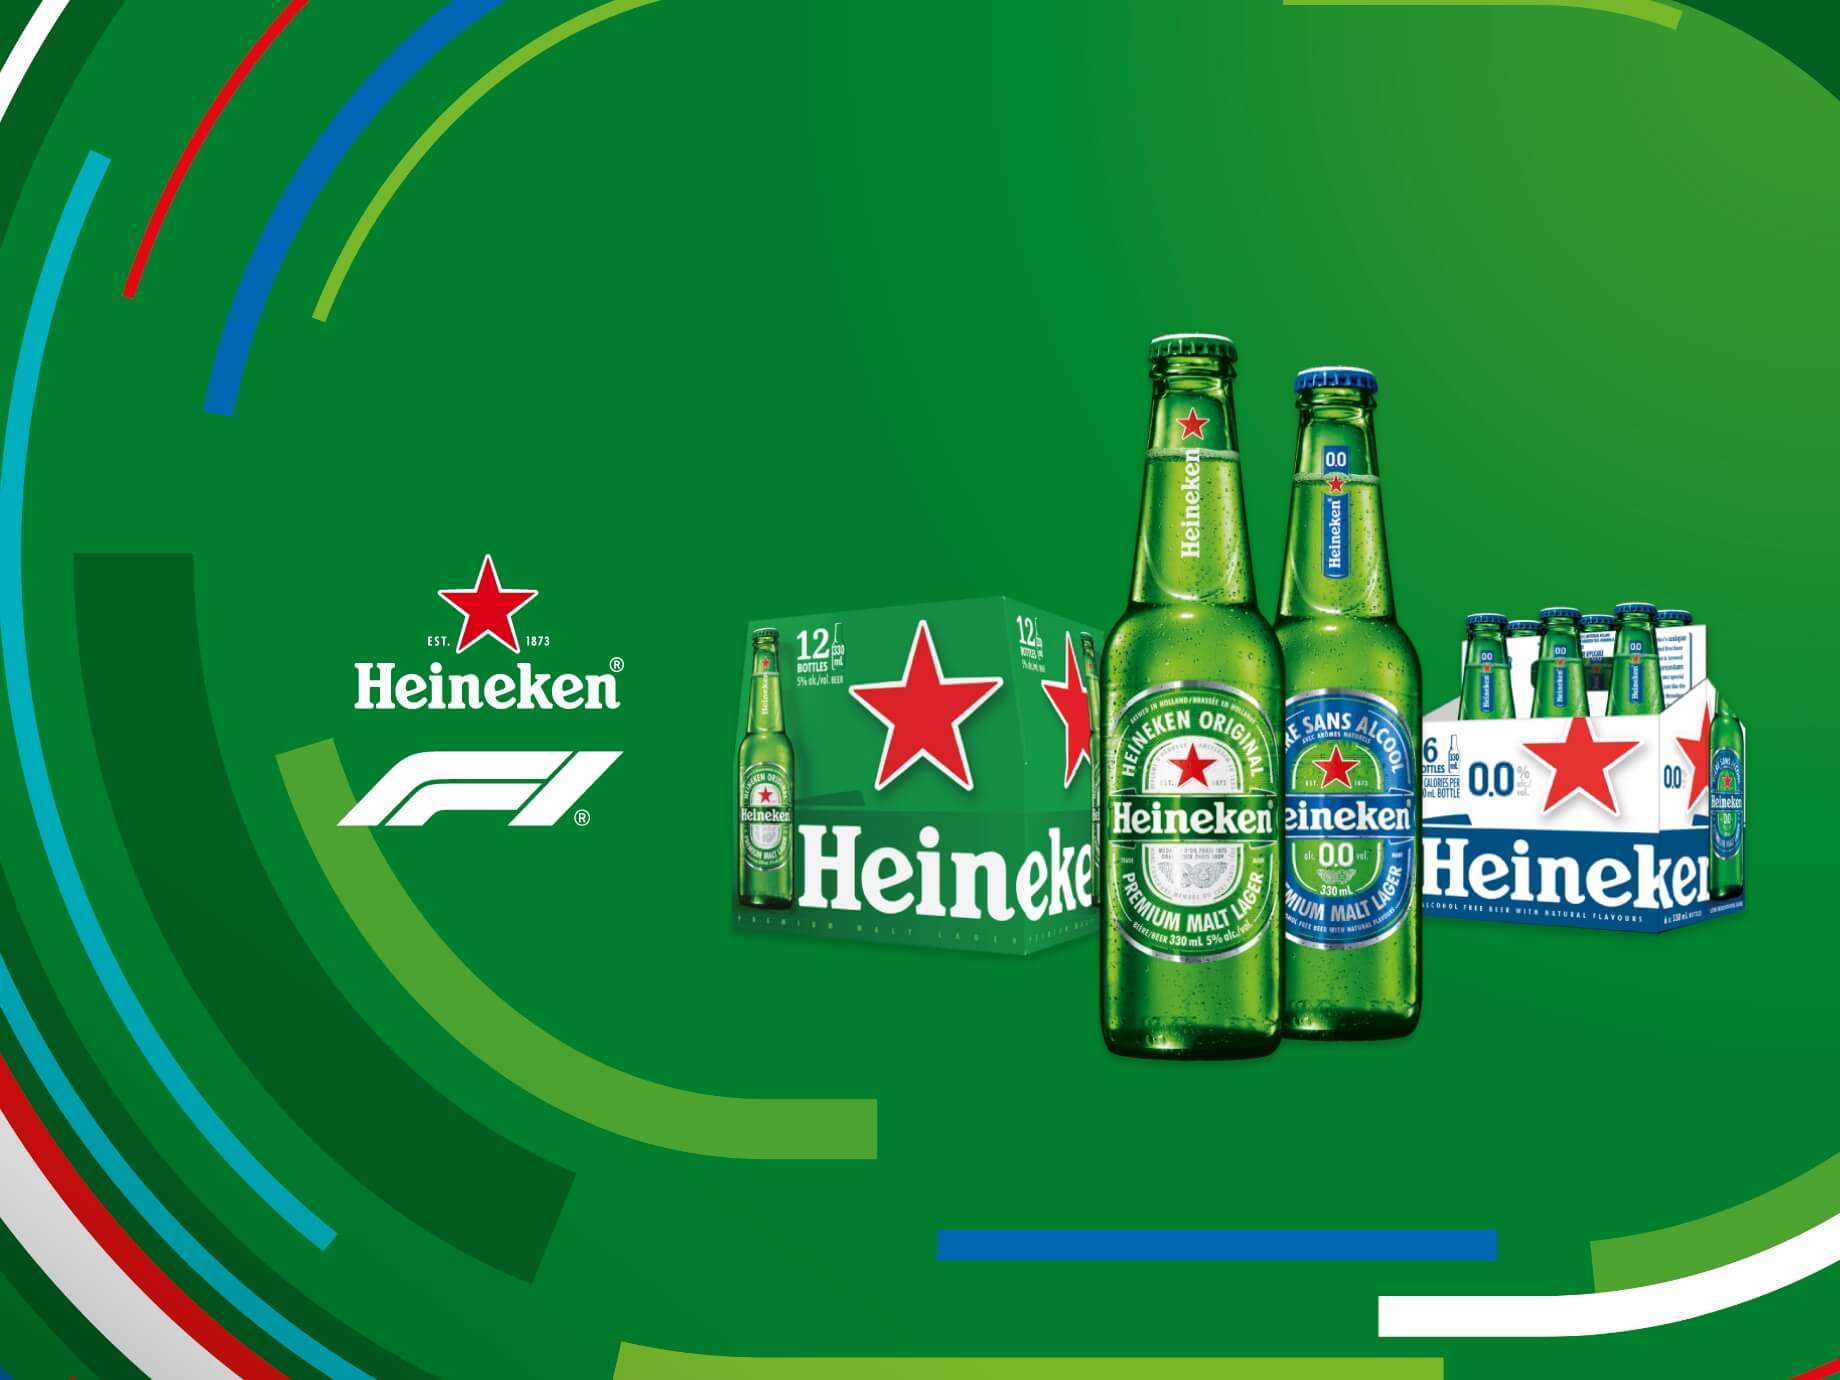 Heineken contest